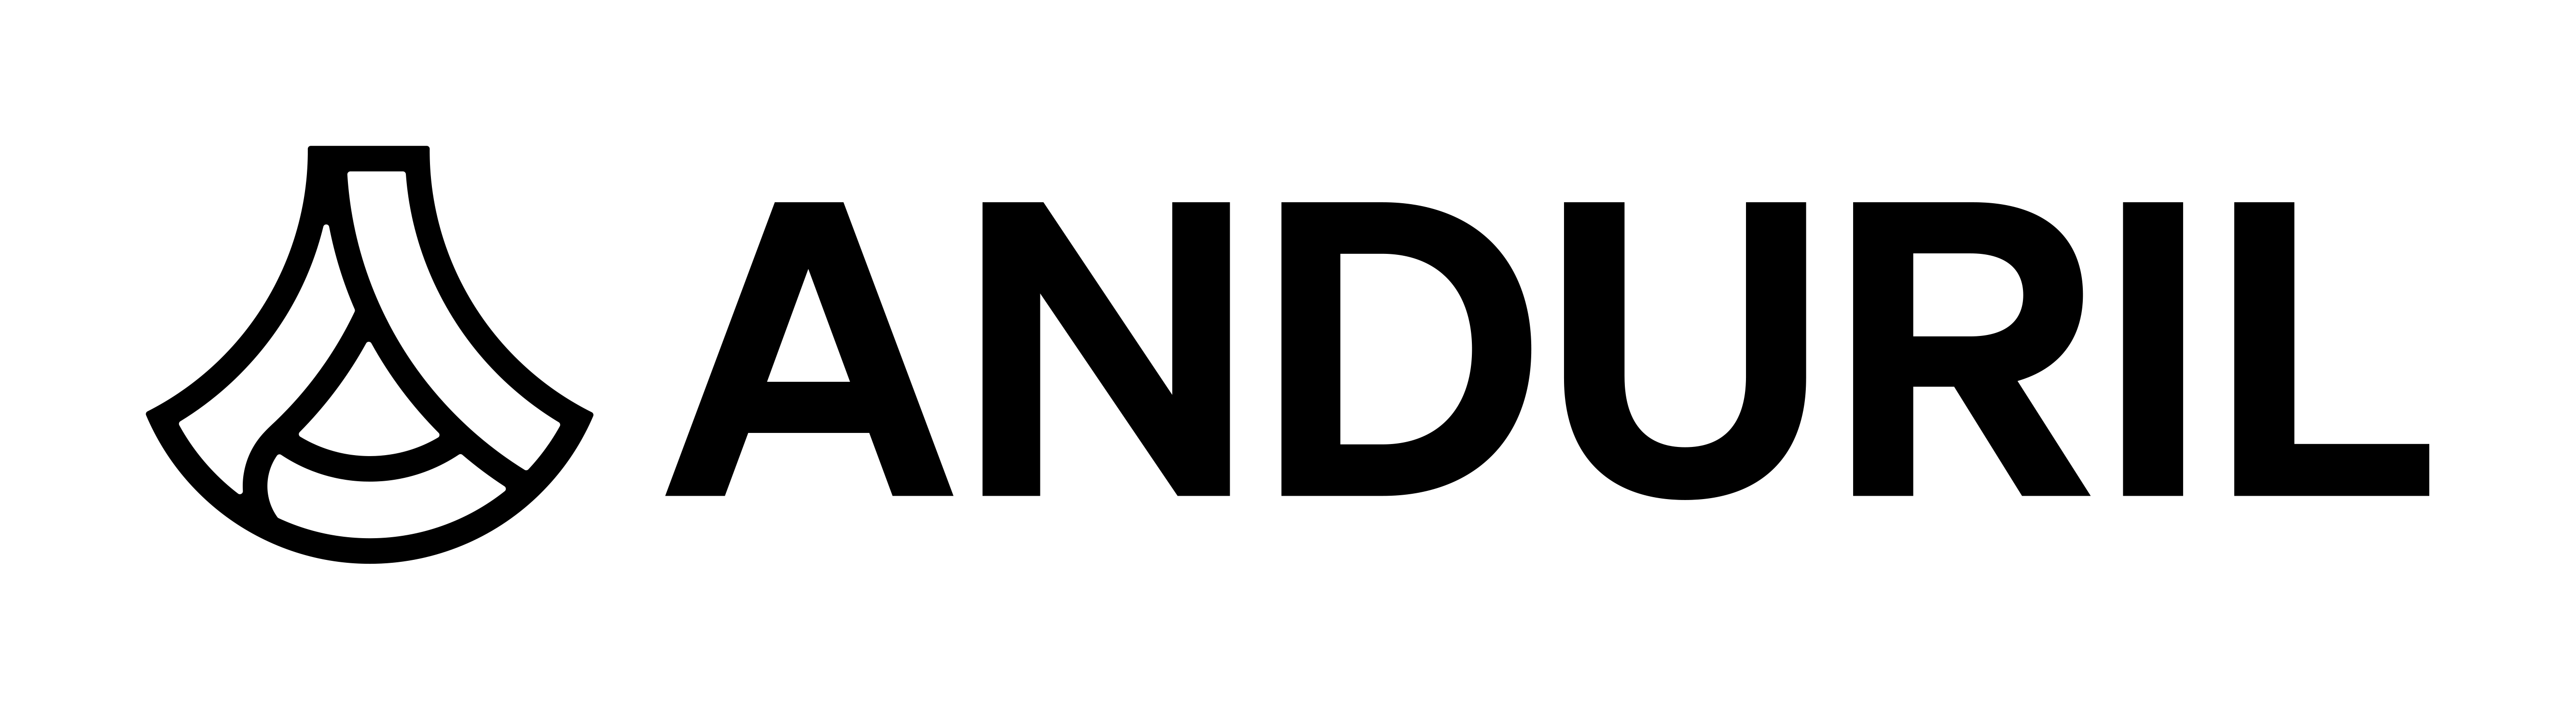 anduril-logo-feb24.jpg